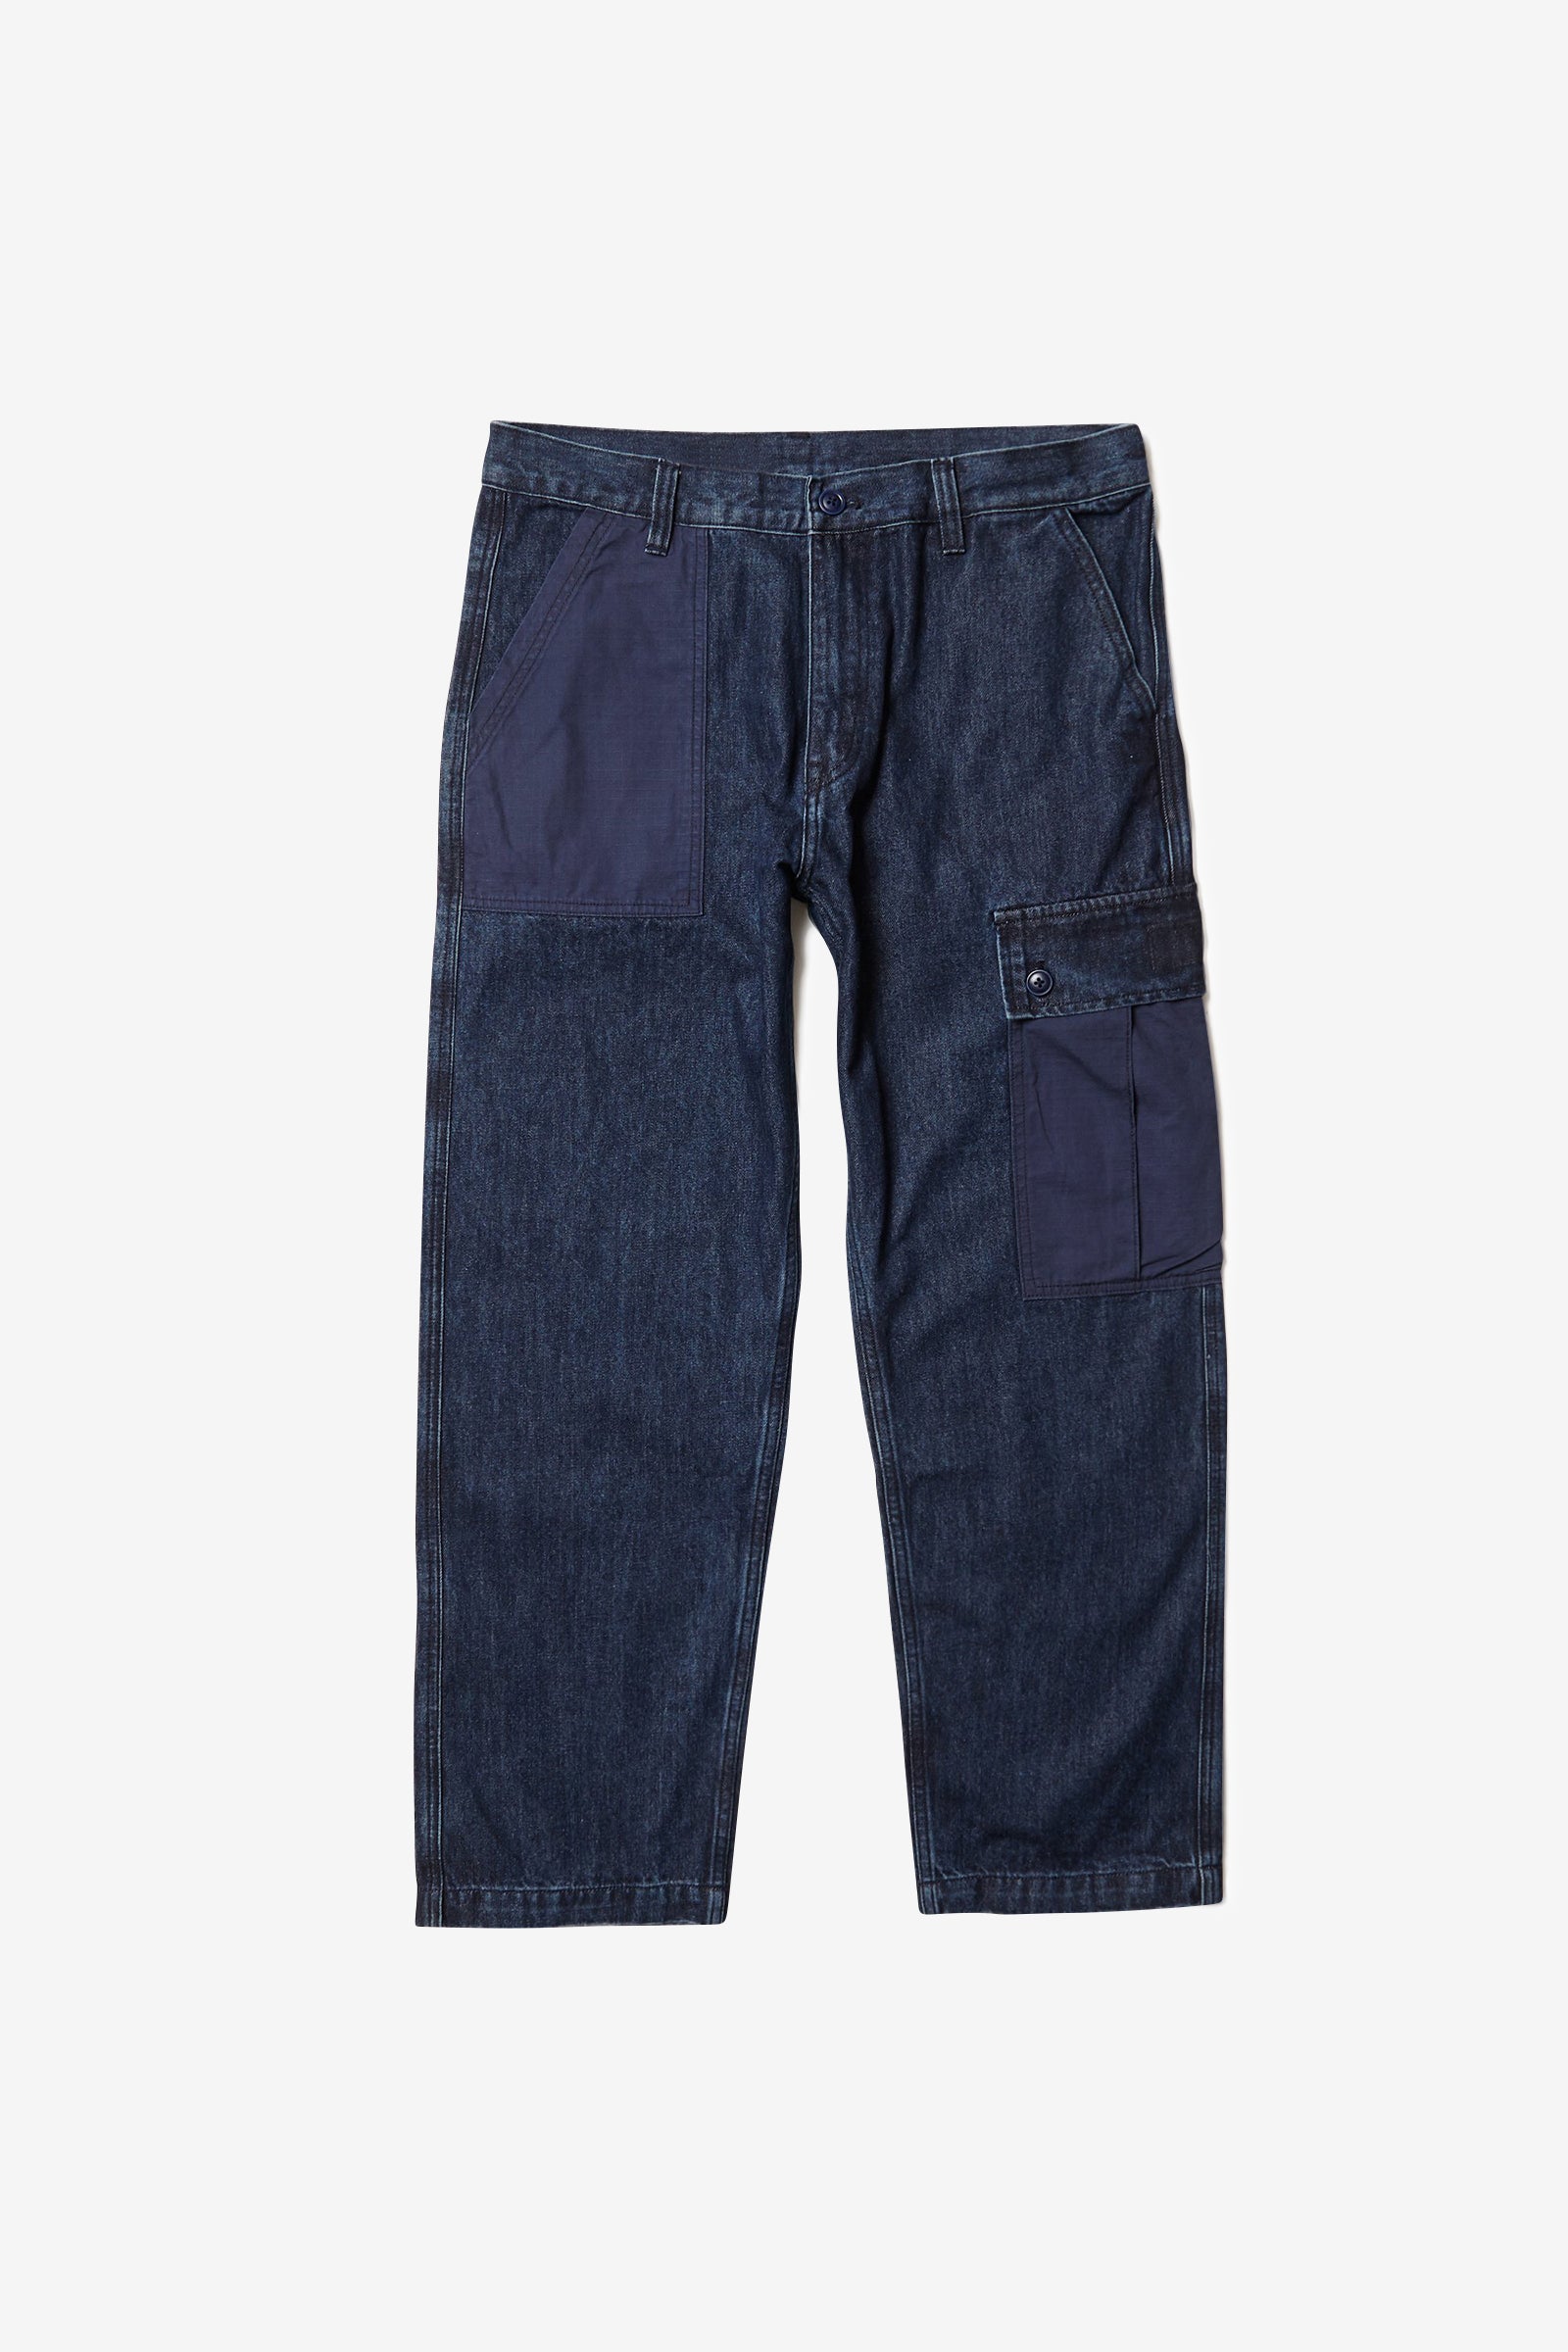 Blacksmith - Tonal Cargo Pants - Indigo Denim